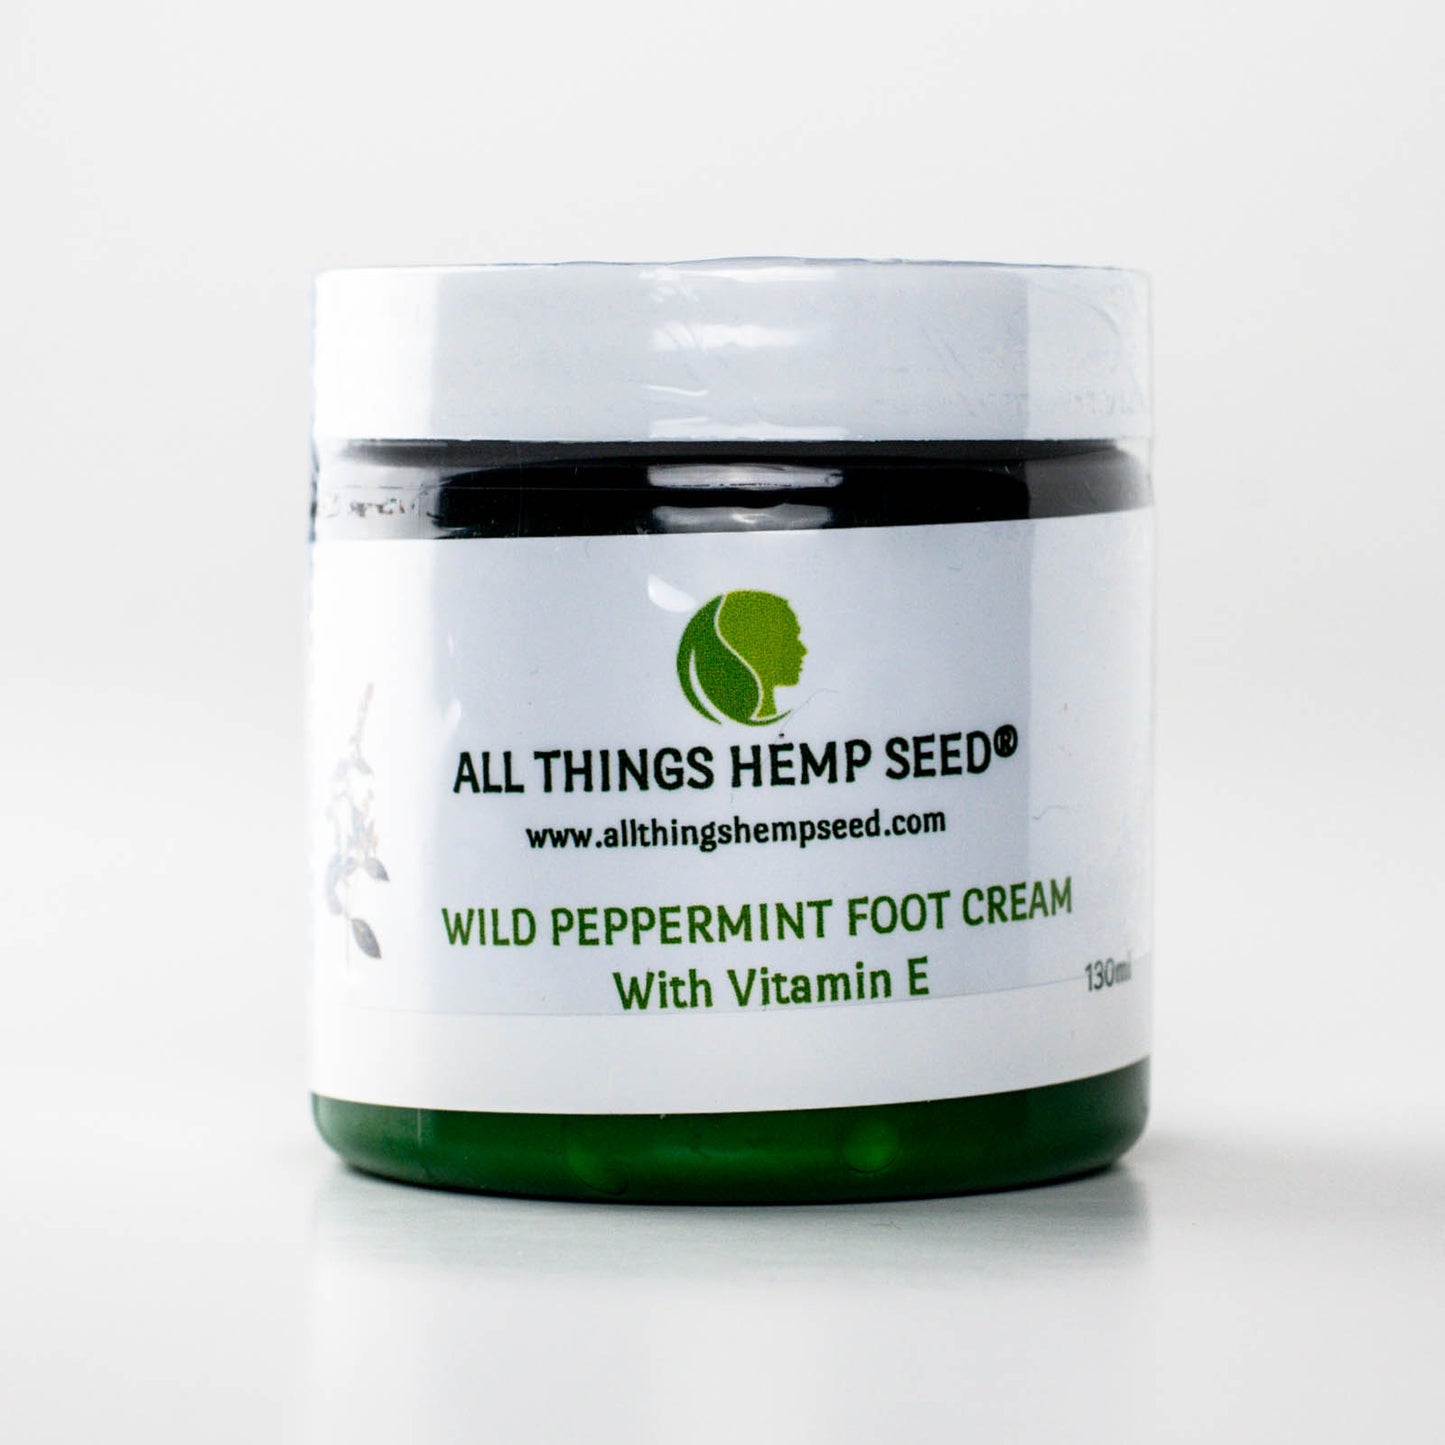 Wild Peppermint Foot Cream